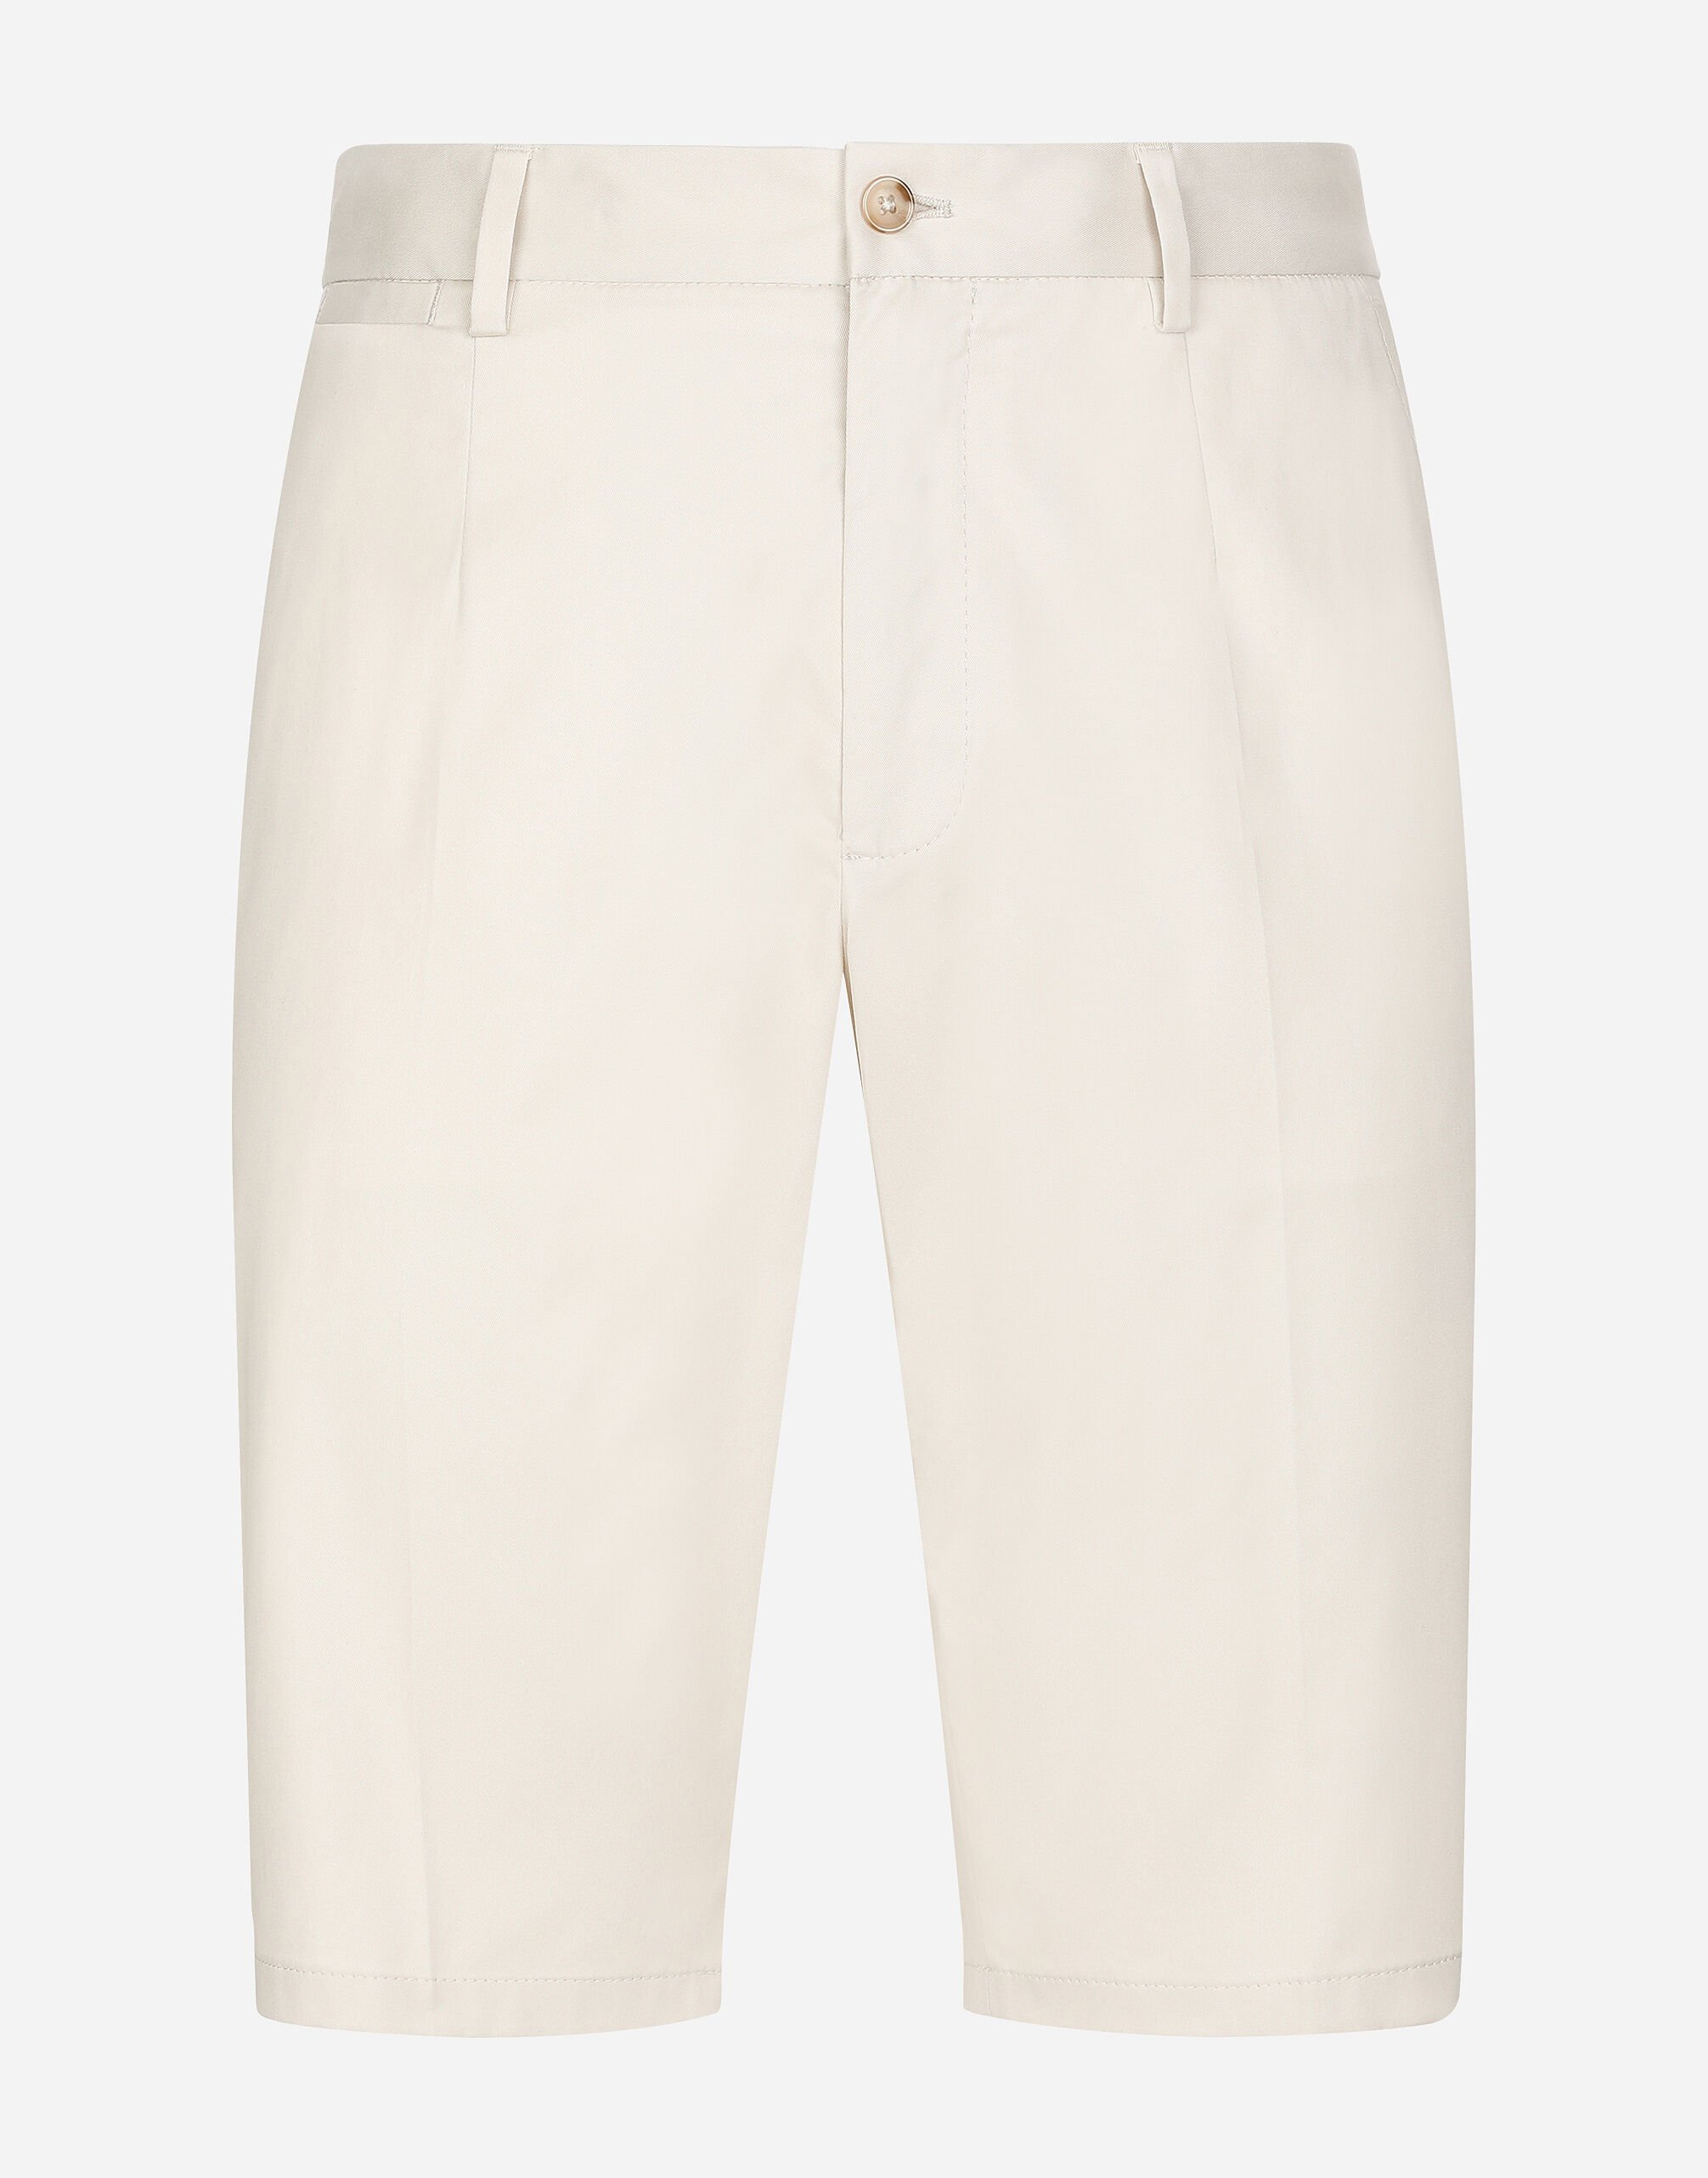 Dolce & Gabbana Stretch cotton shorts with DG patch Print GW0MATHS5RU